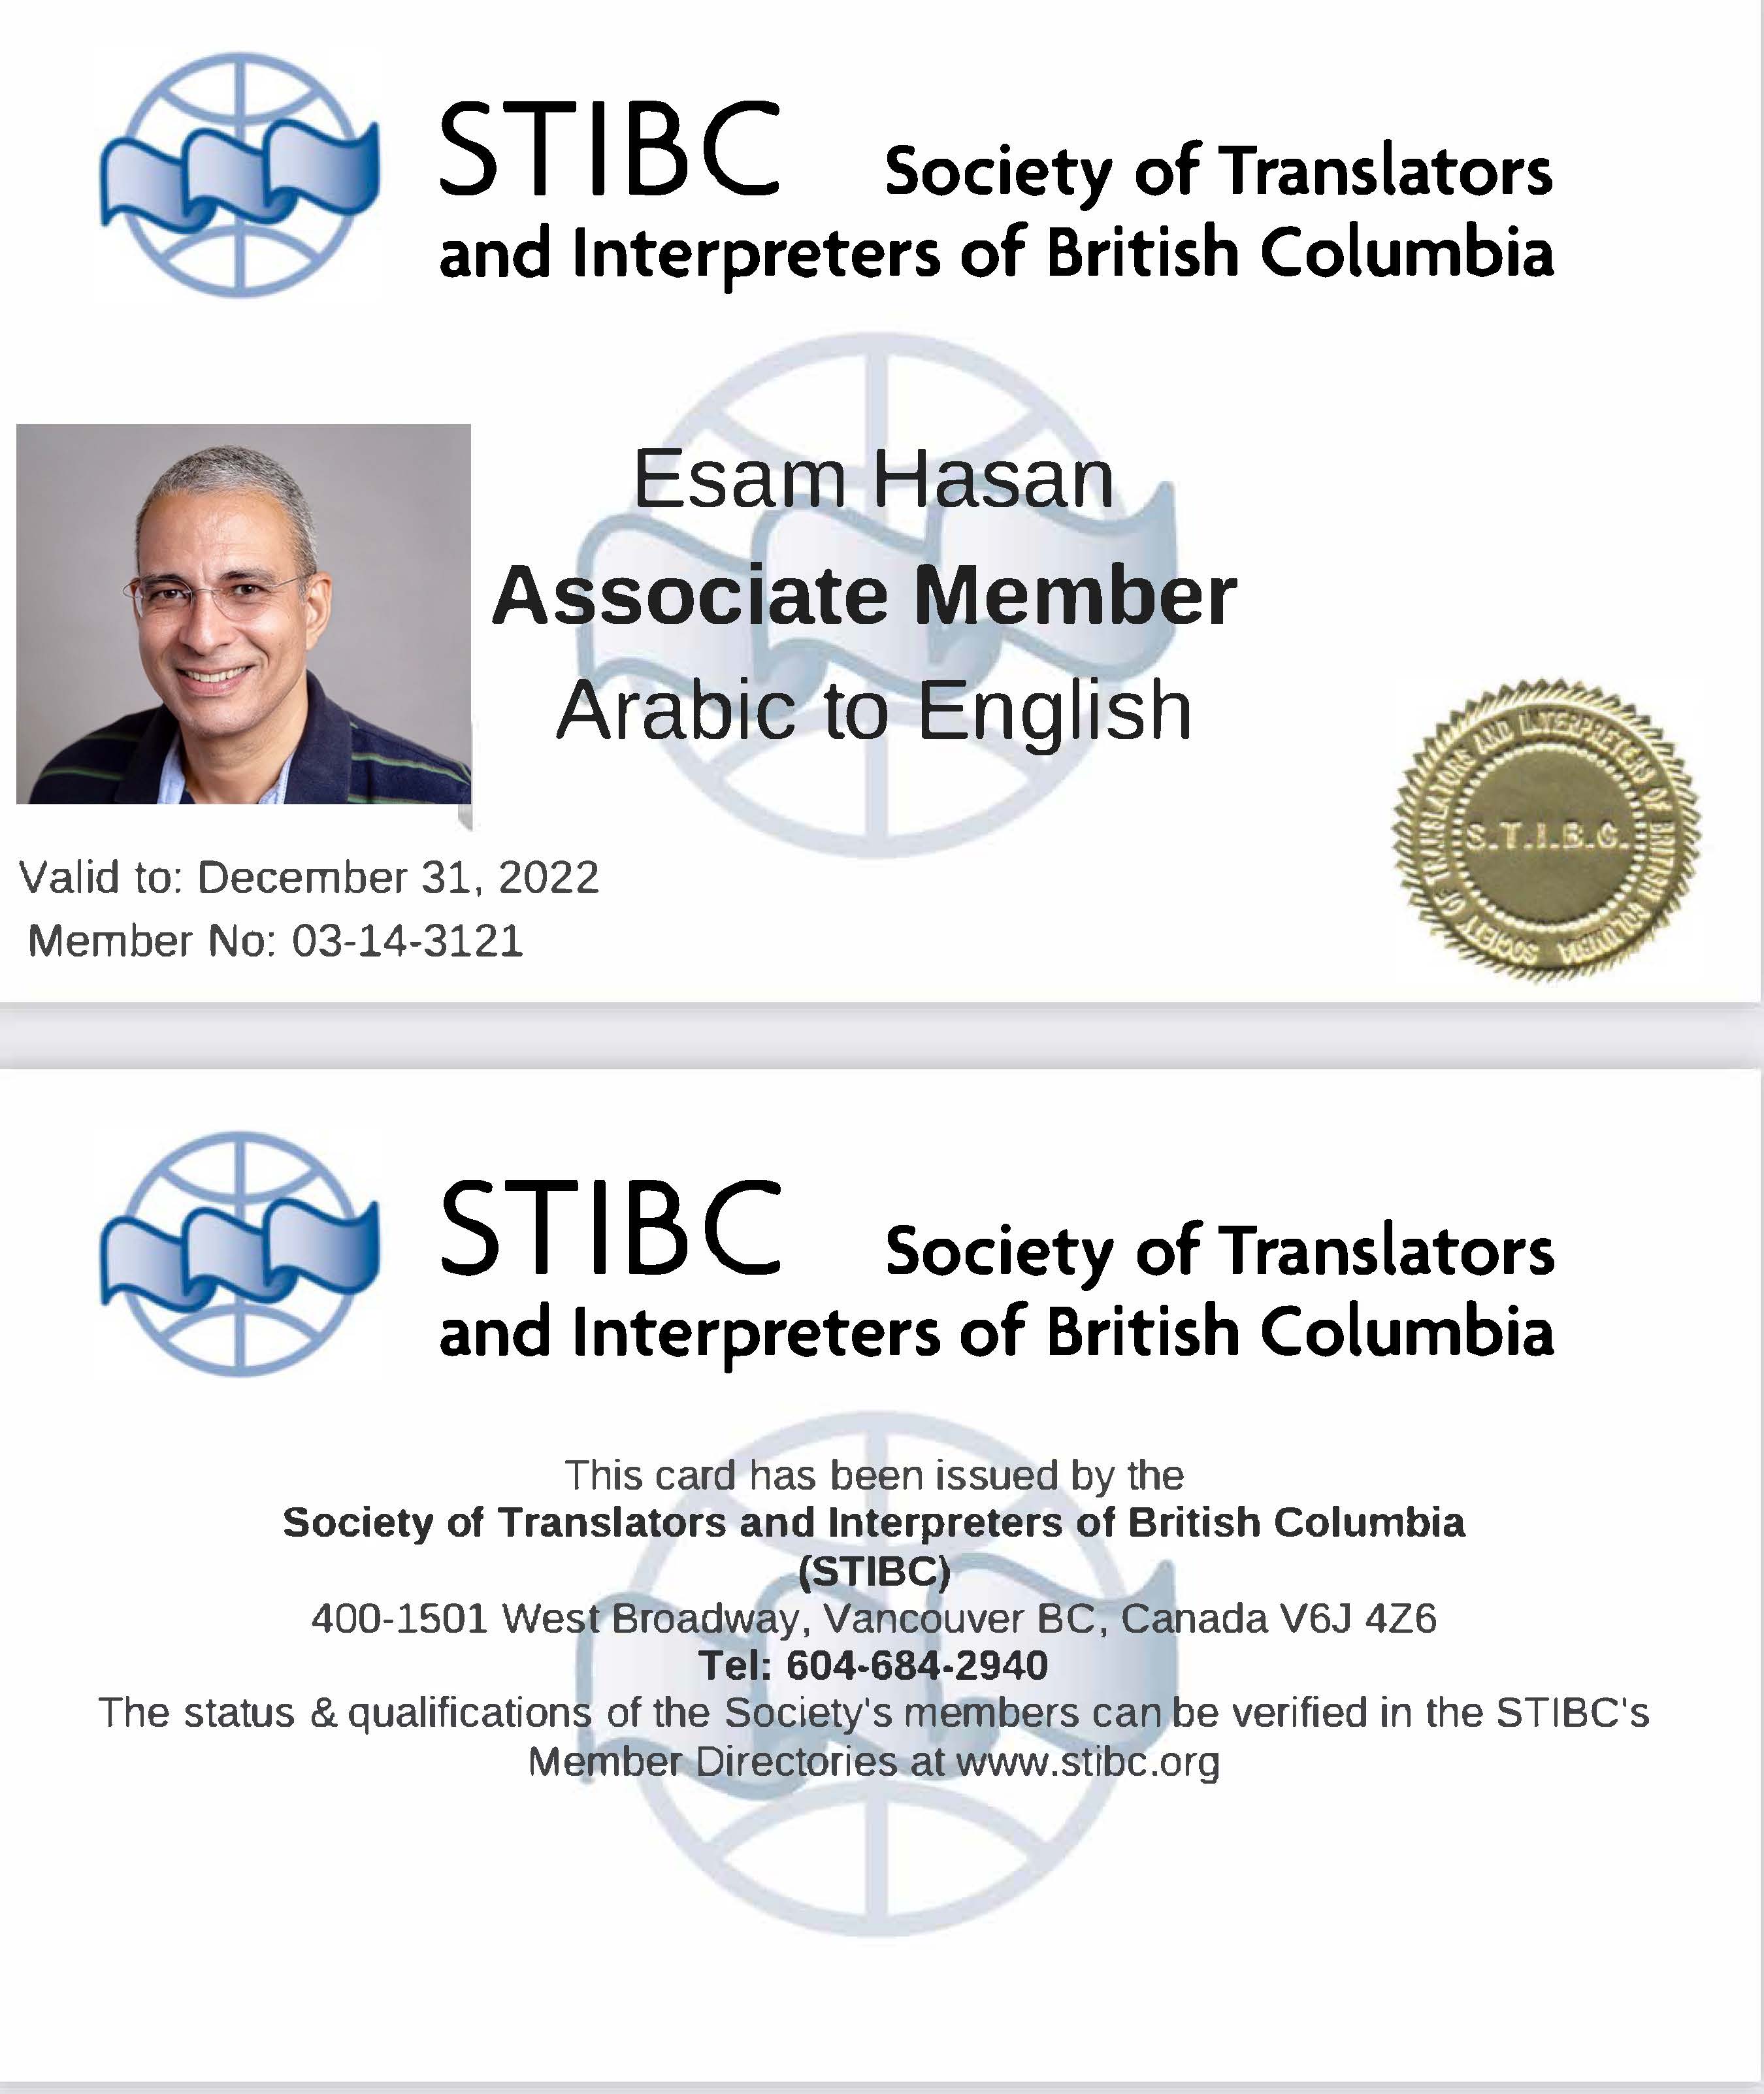 Esam Hasan's Member Card of Society of Translators and Interpreters of British Columbia
                      (STIBC)